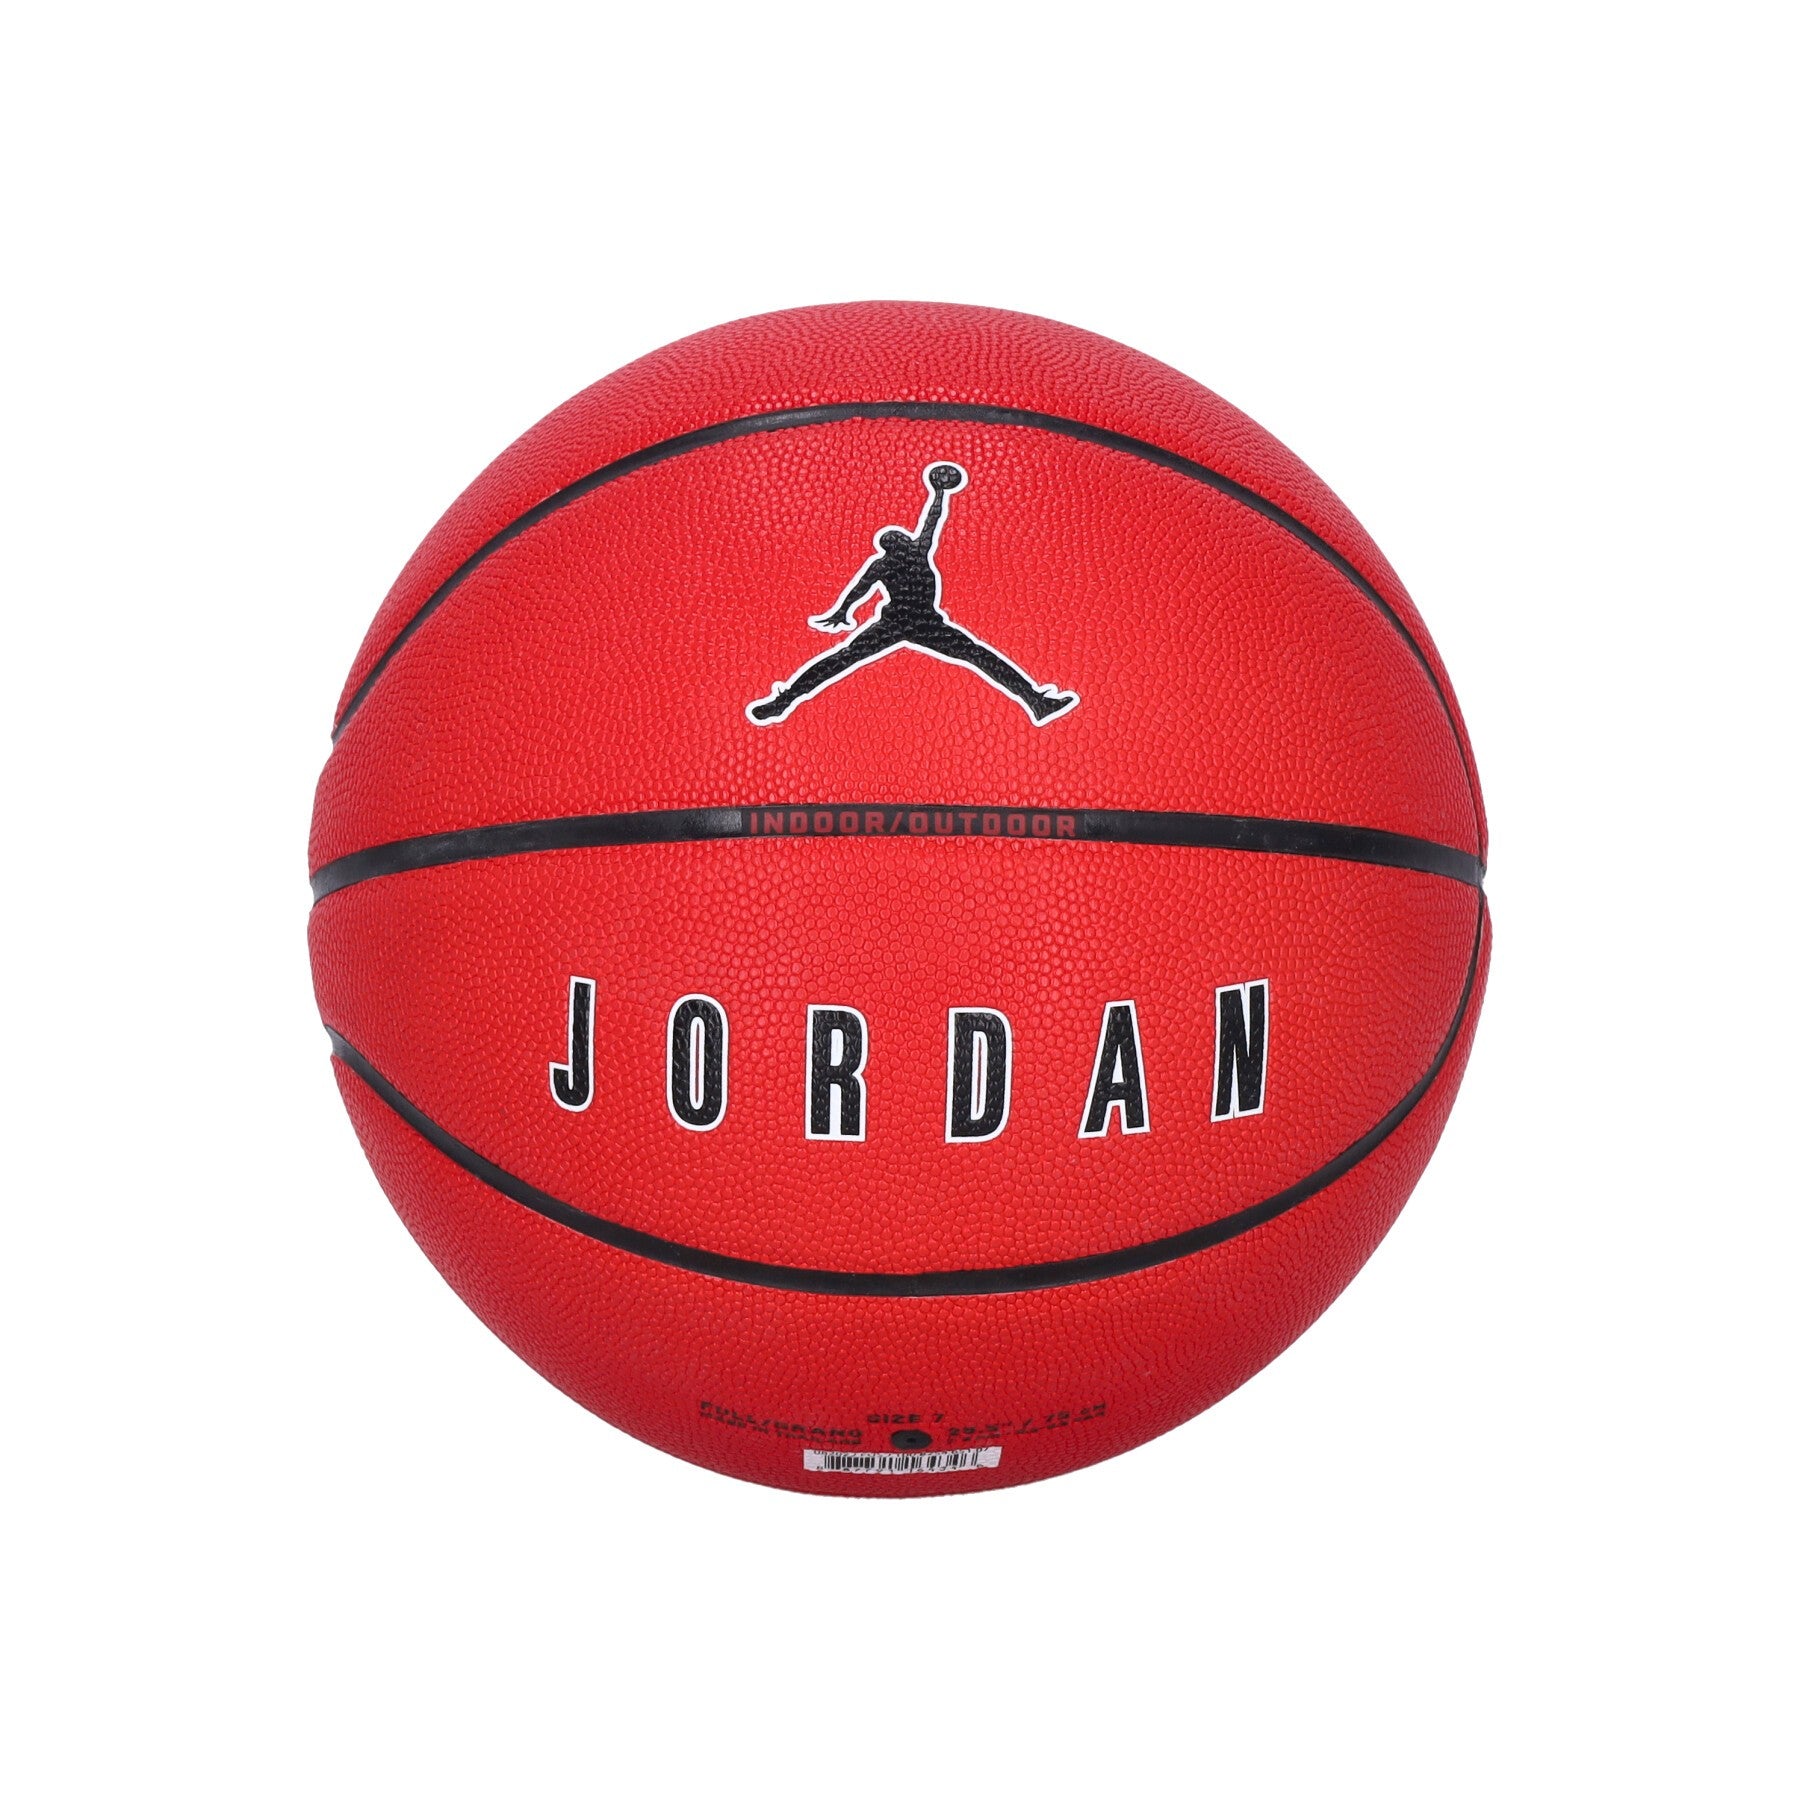 Jordan Nba, Pallone Uomo Ultimate Size 7, 